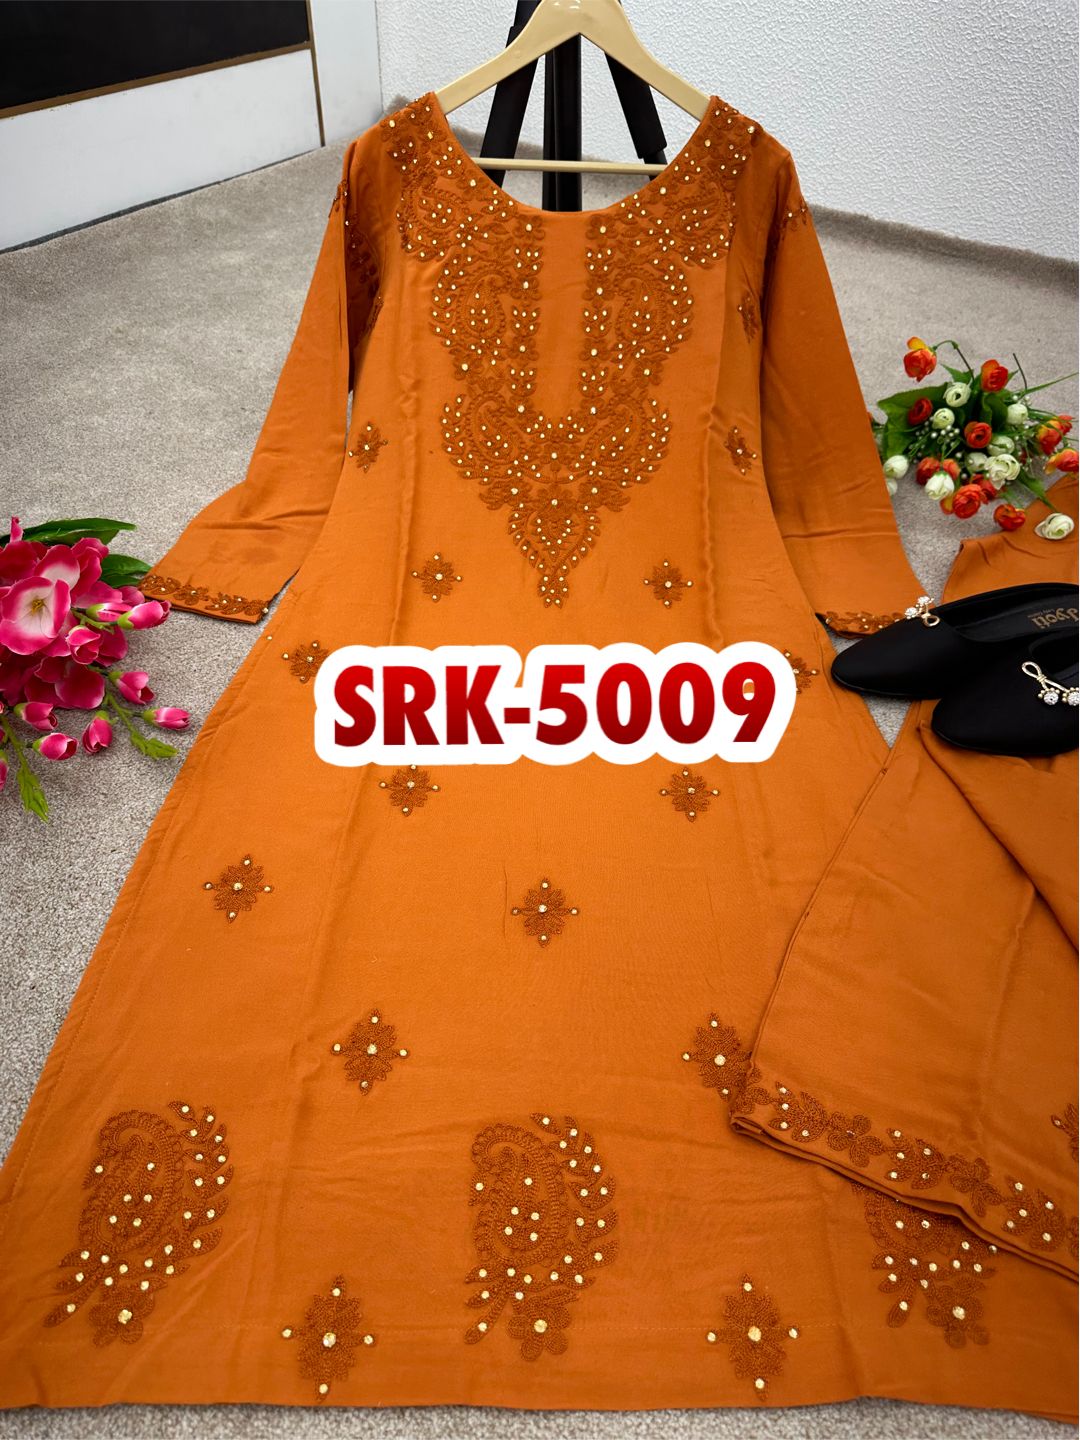 SHREE HARI SRK 5009 DESIGNER SUITS WHOLESALE